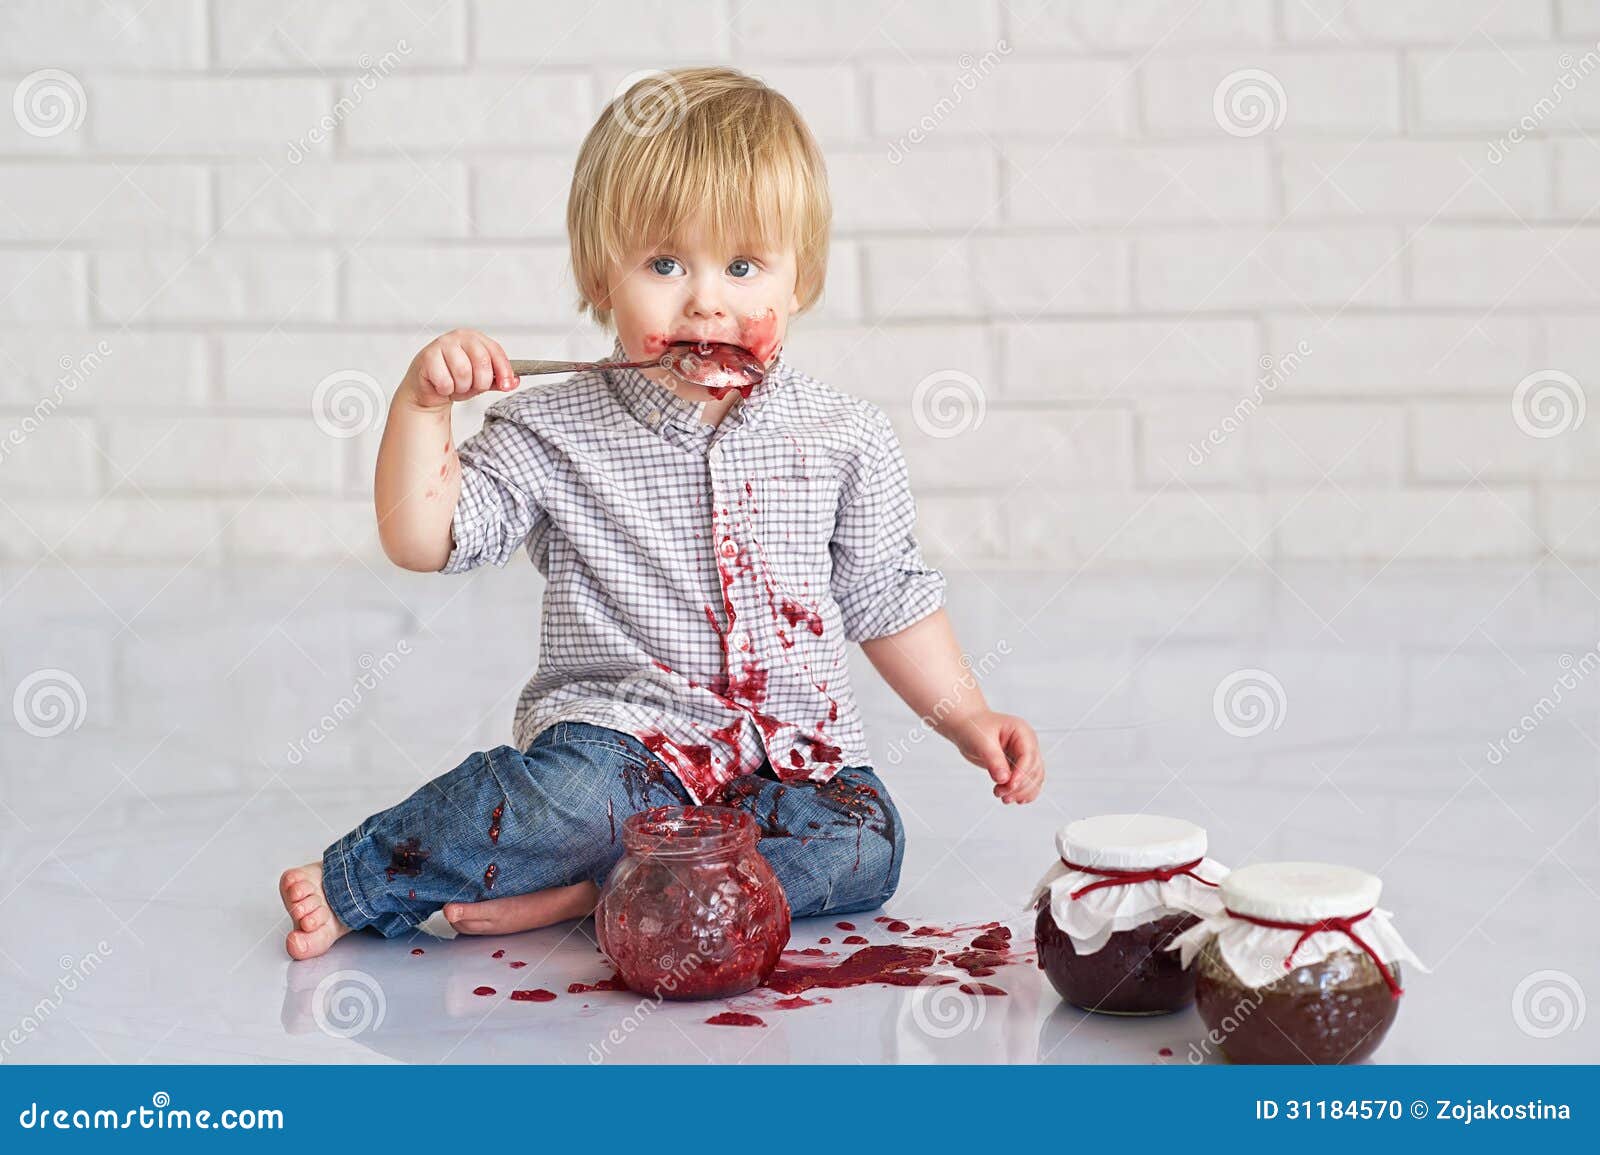 kid-eating-strawberry-jam-cute-little-boy-got-messy-glass-jars-31184570.jpg